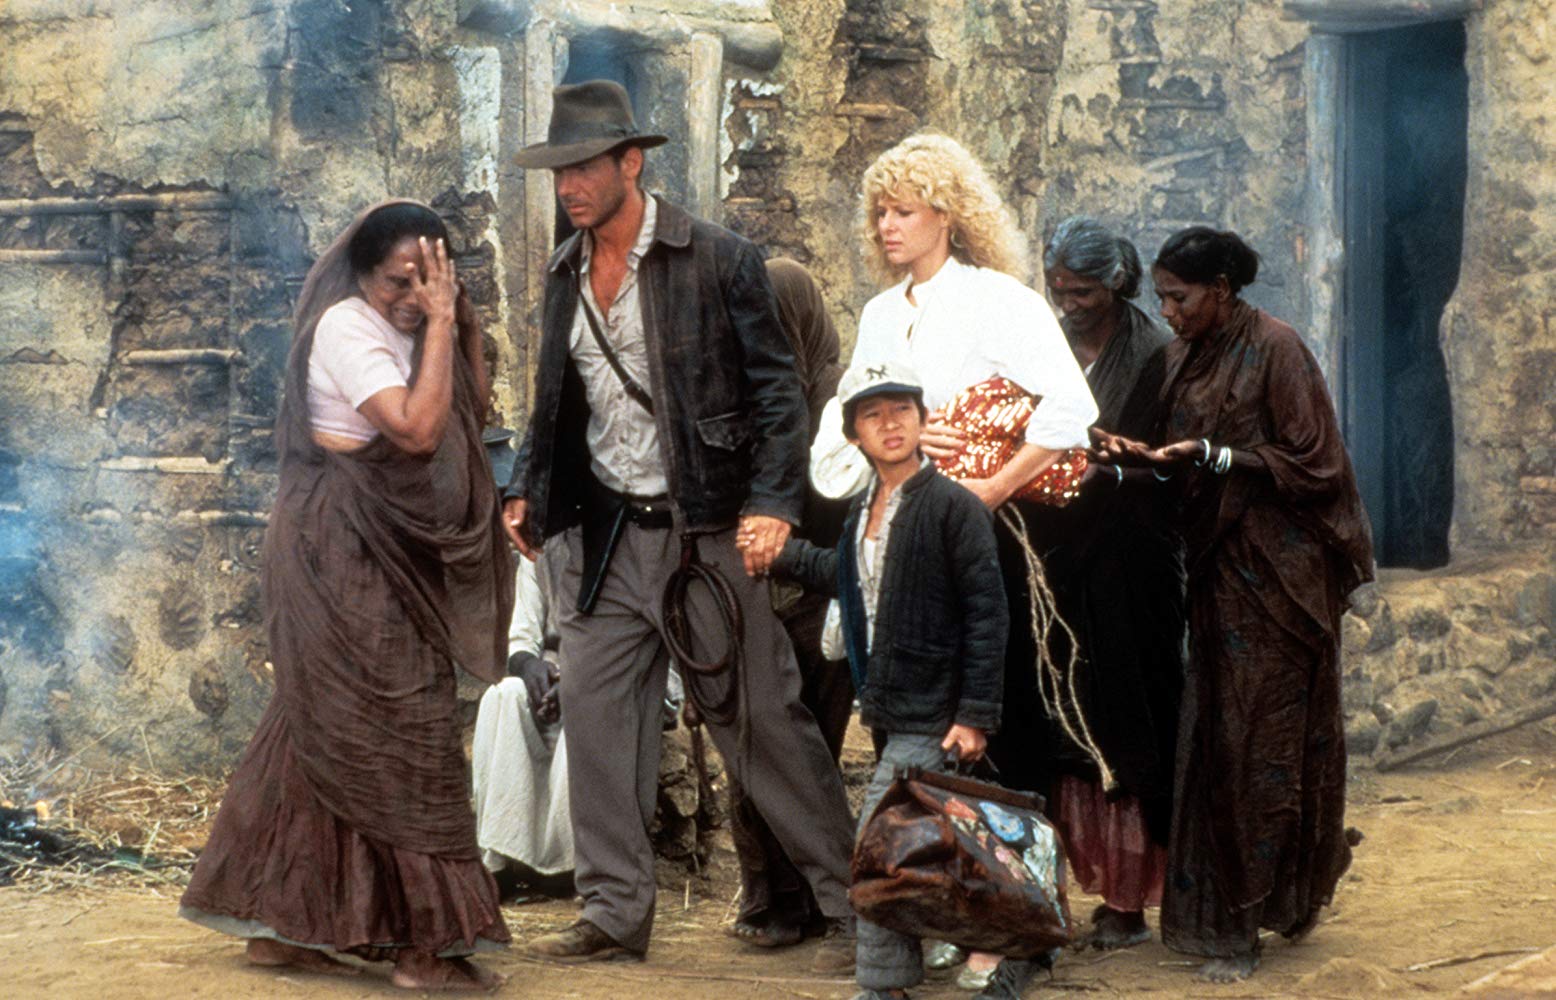 Indiana Jones e a Última Cruzada - Filme 1989 - AdoroCinema